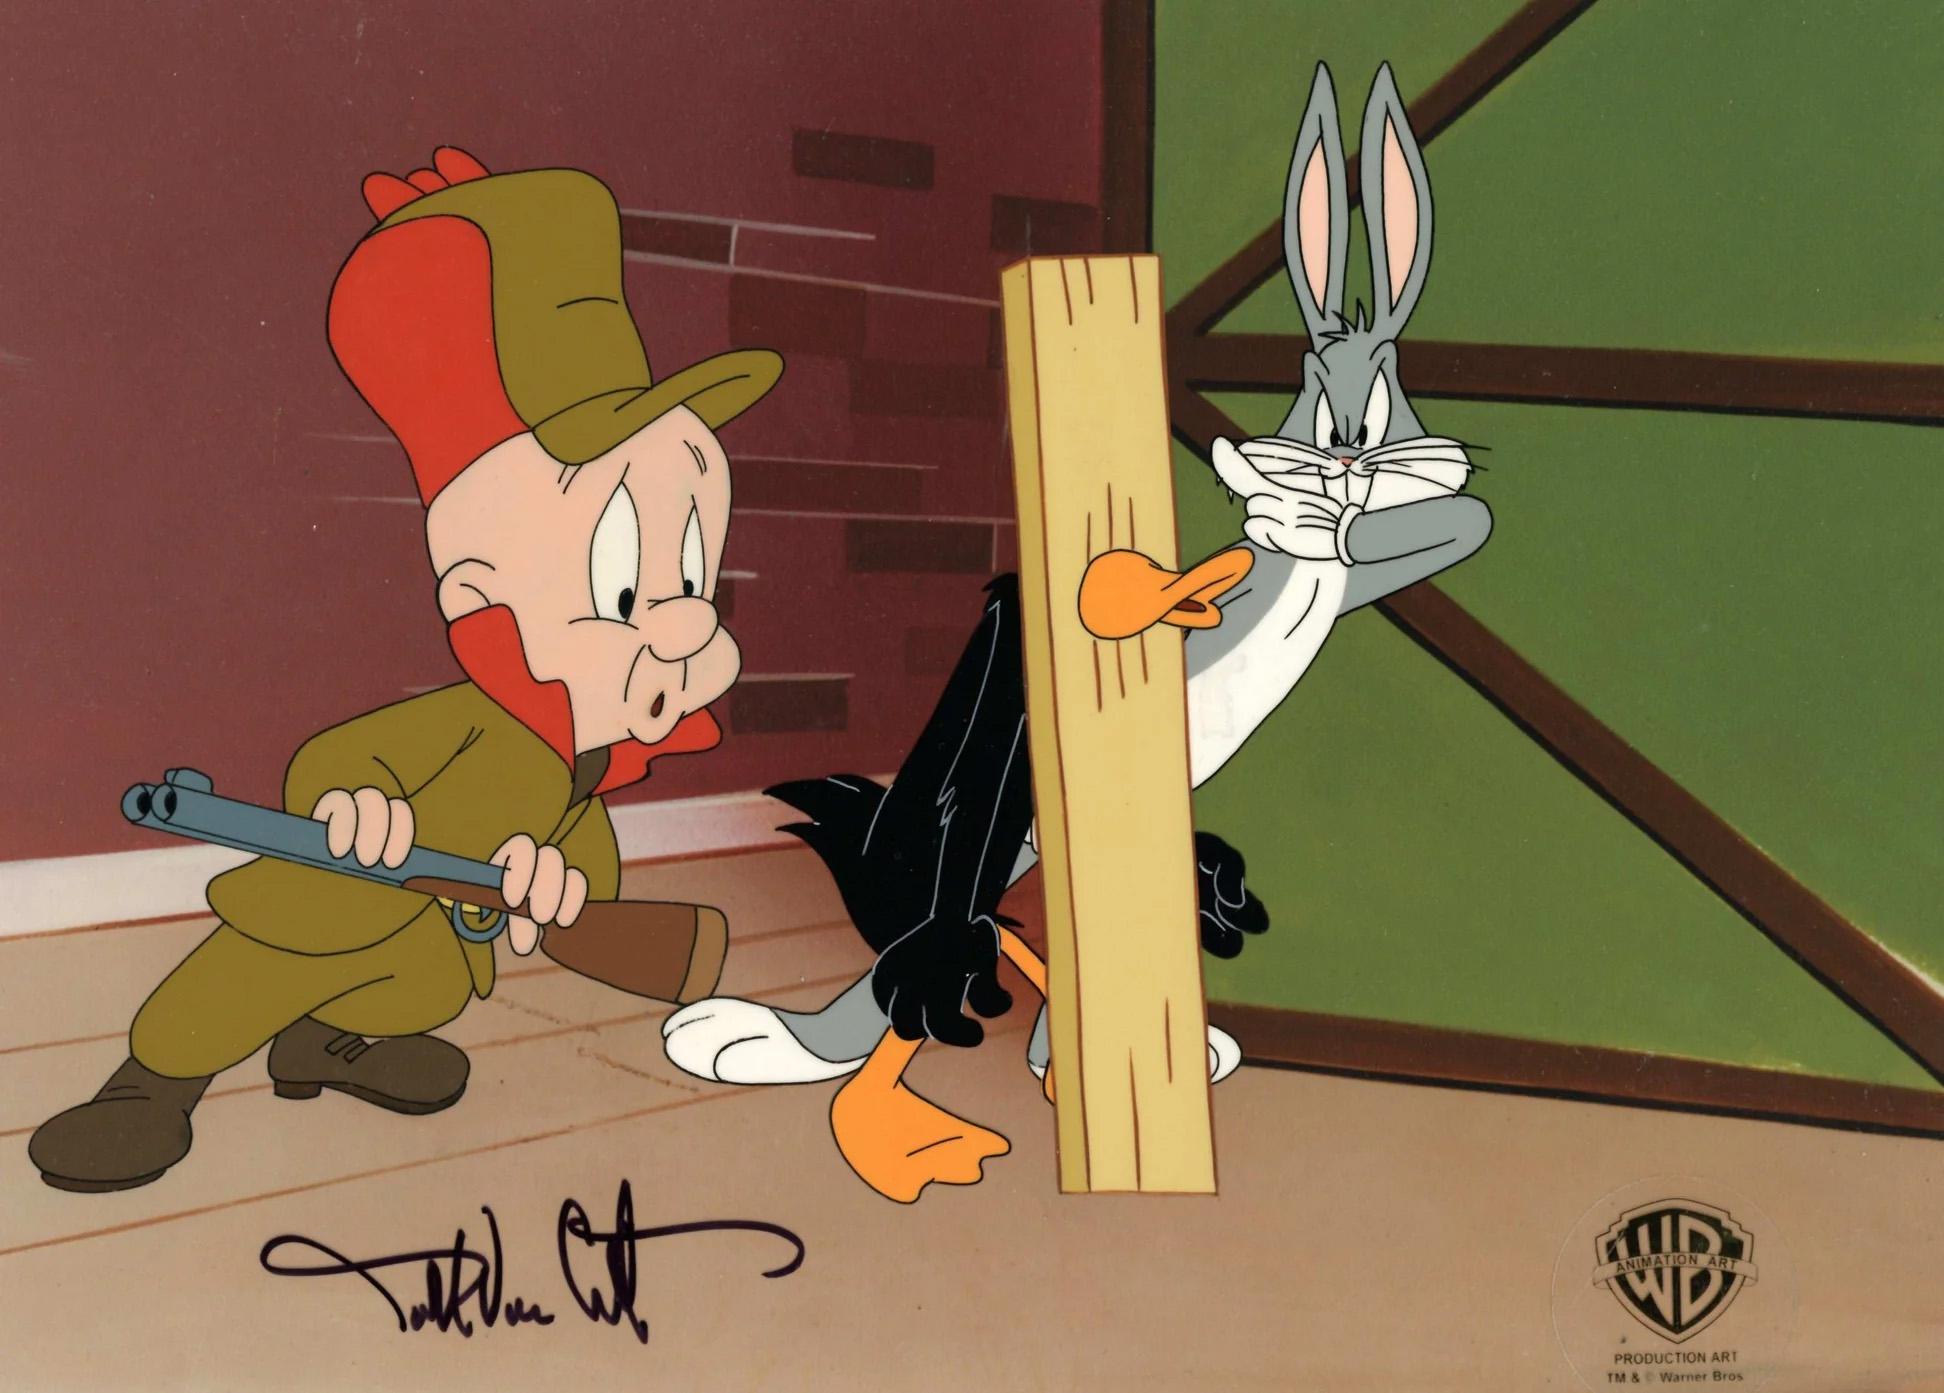 Looney Tunes Original Prod. Cel Signed by Darrel Van Citters: Bugs, Daffy, Elmer - Art by Darrell Van Citters